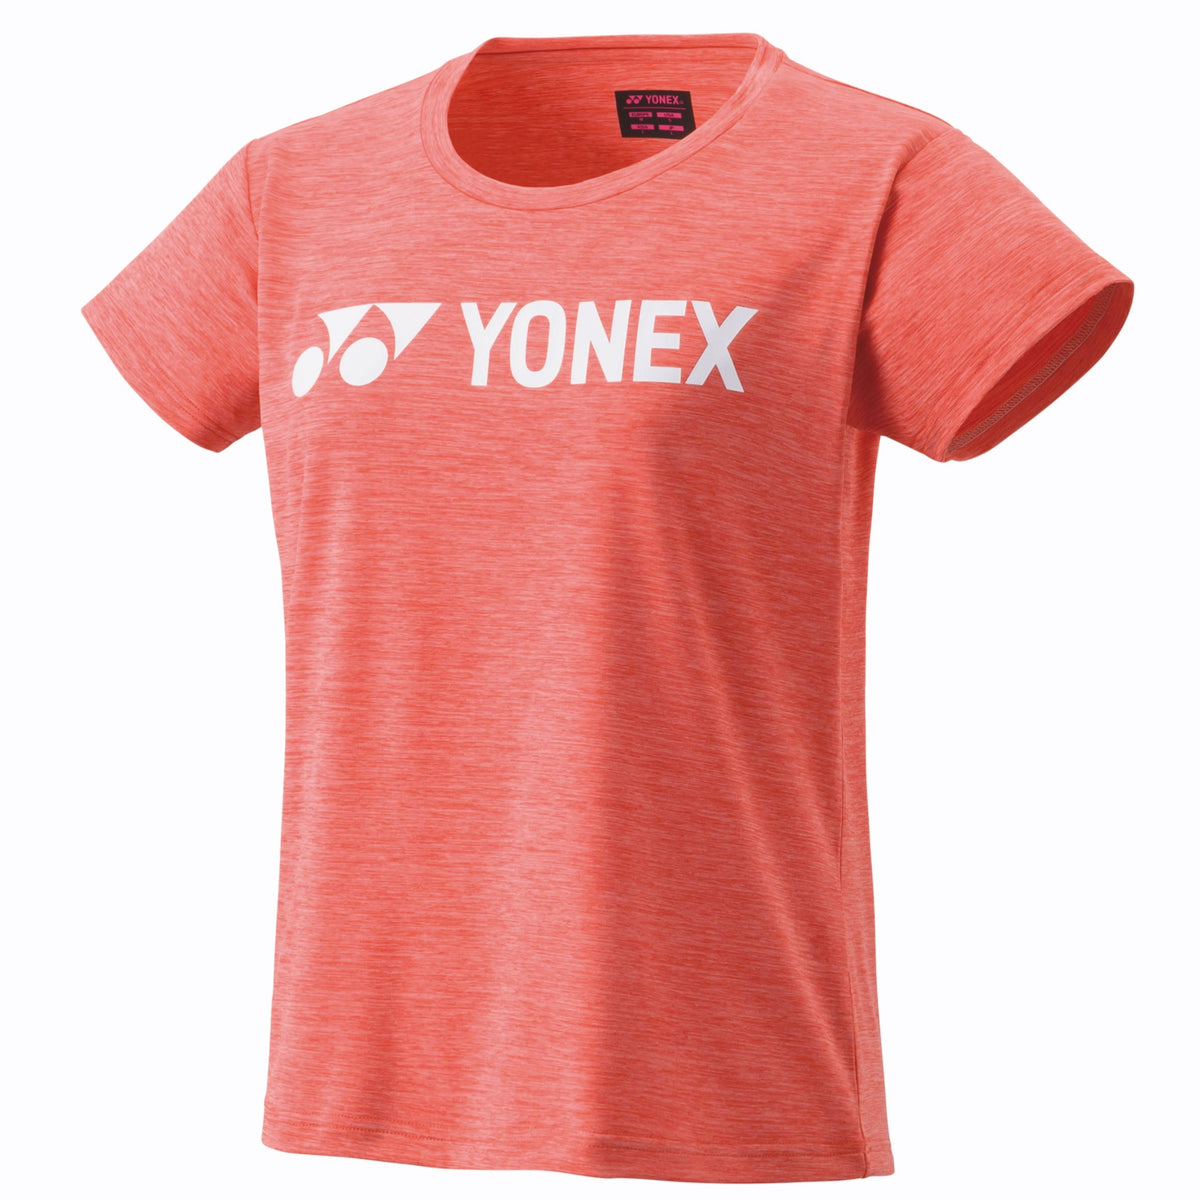 Yonex Unisex Shirt indigo marine